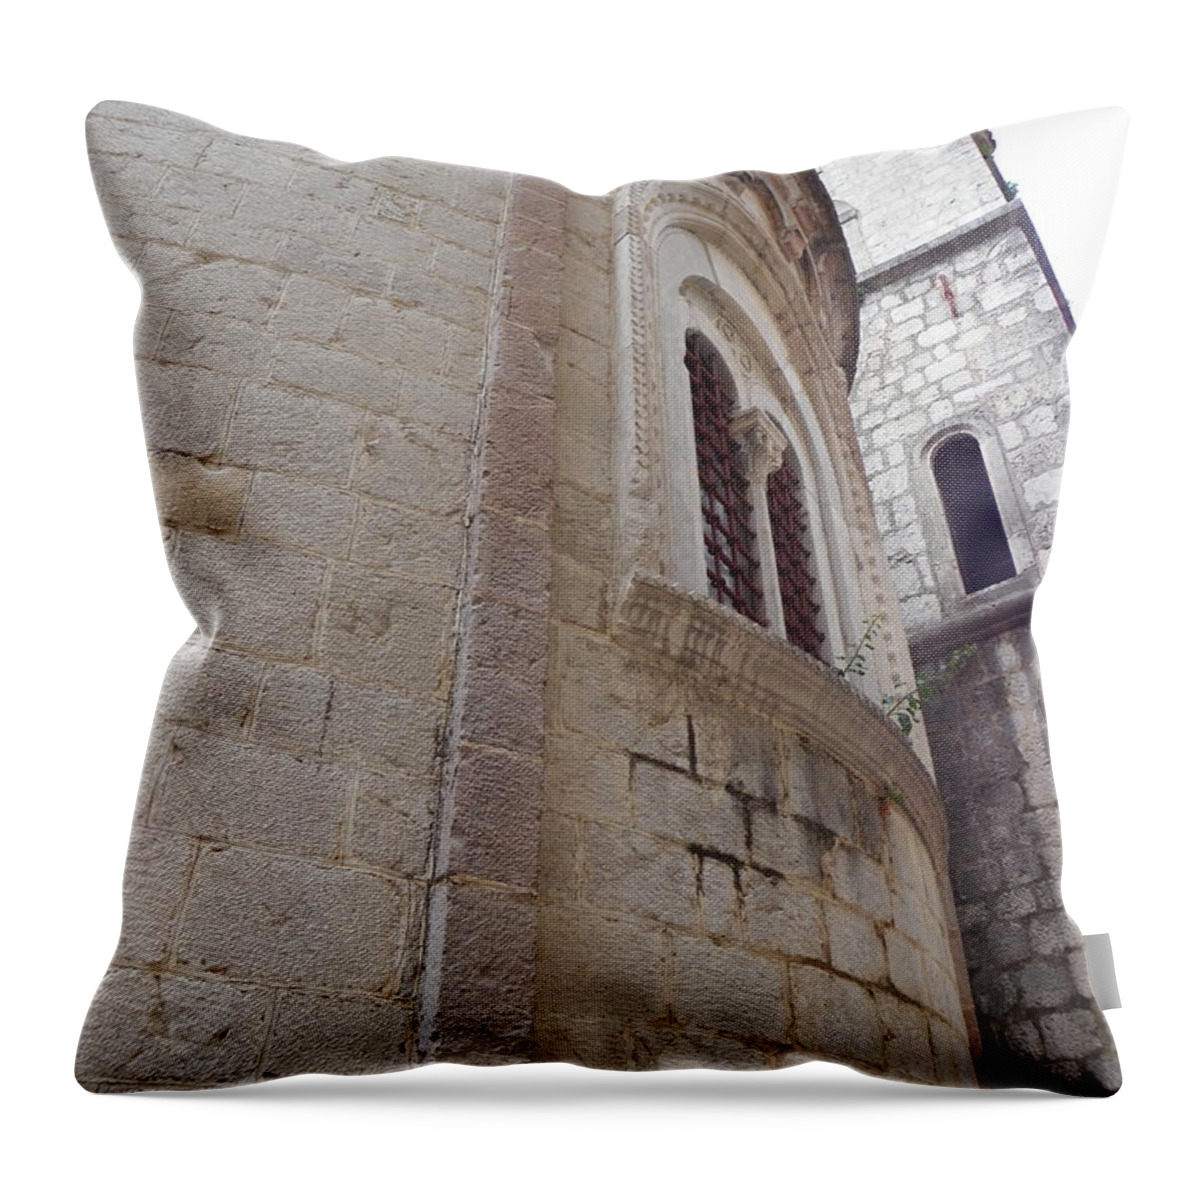 Old Church Throw Pillow featuring the photograph Church tower by Vineta Marinovic